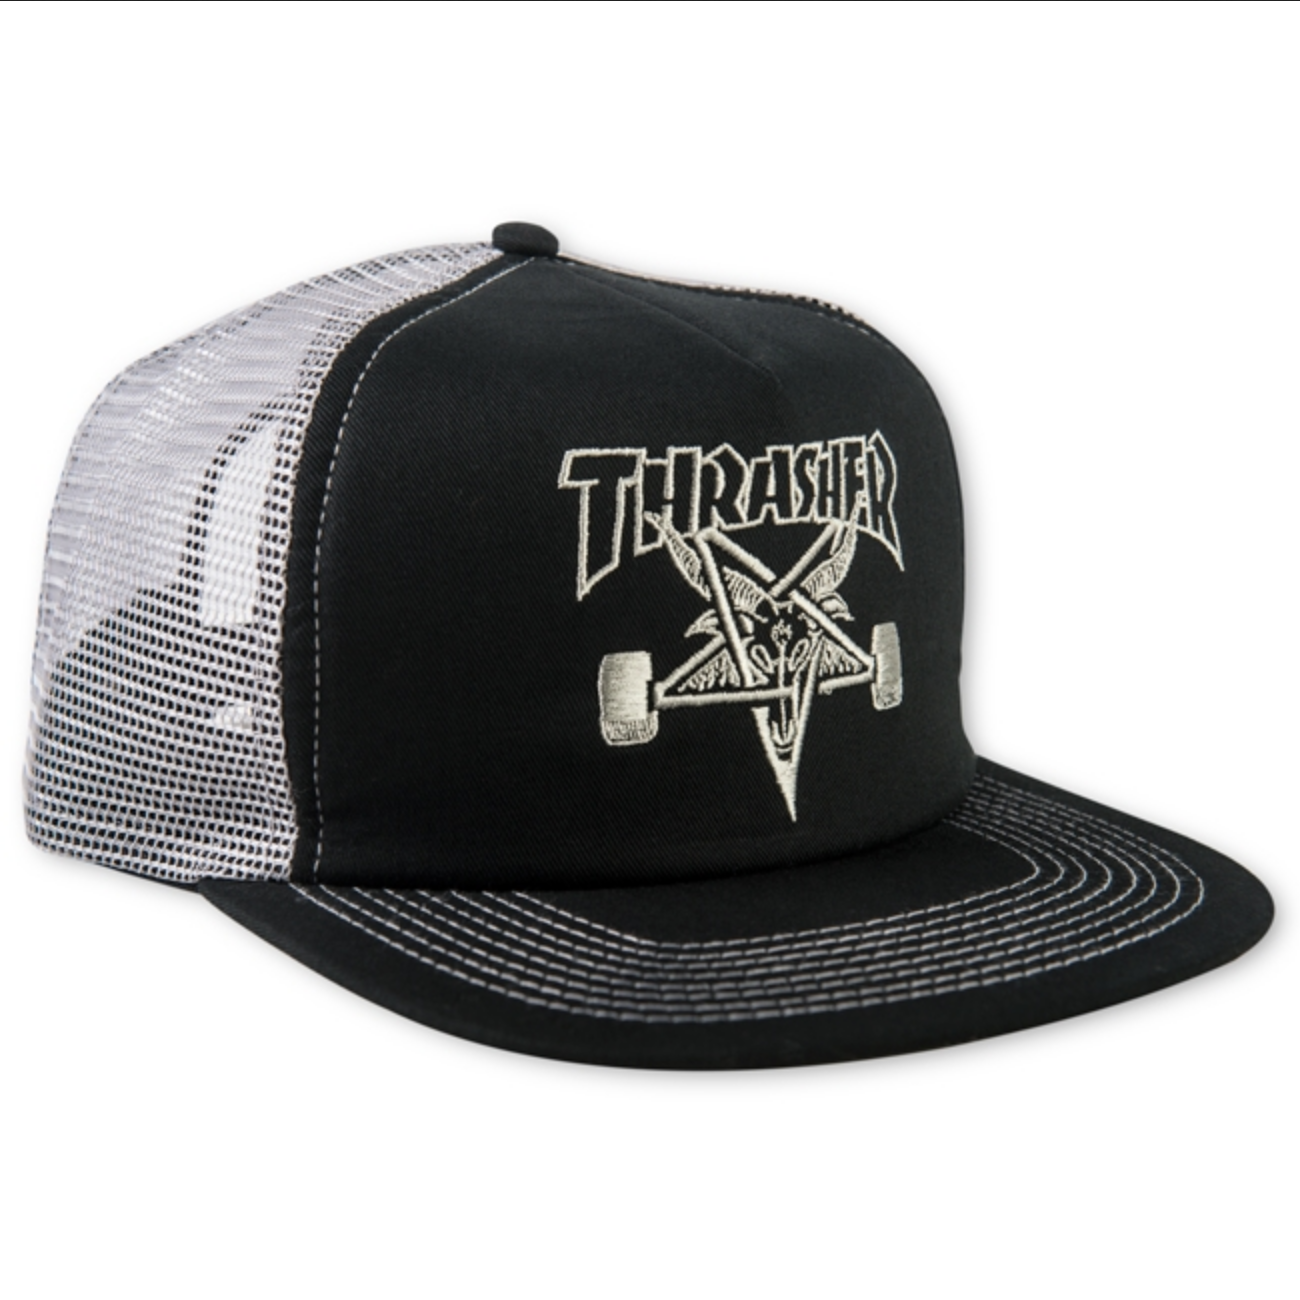 Thrasher Mag. Mesh Skategoat Embroidered Cap Black/Grey